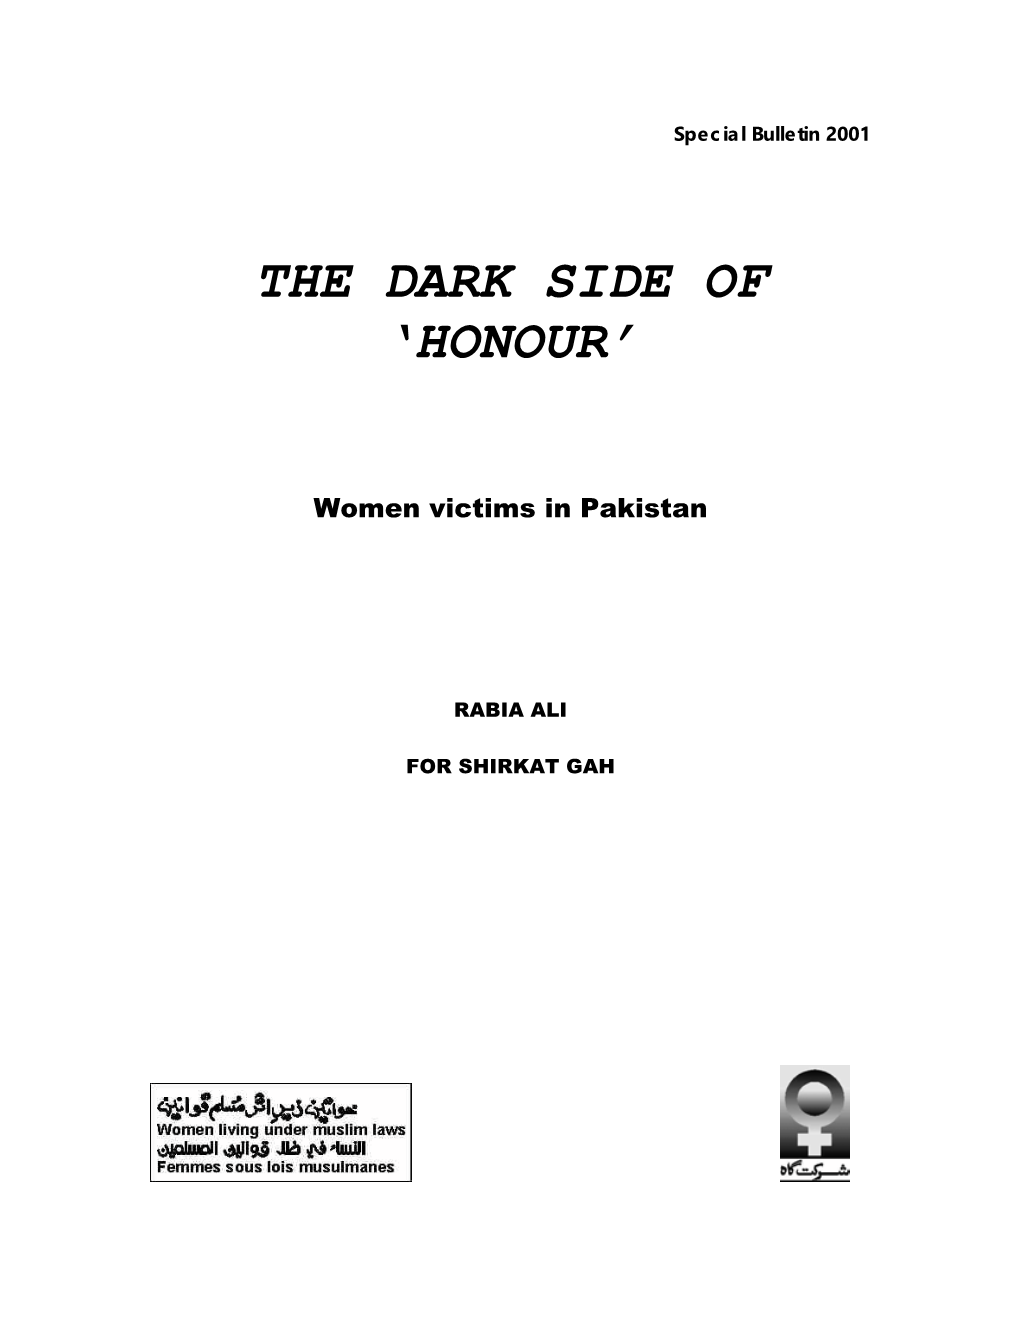 The Dark Side of 'Honour'